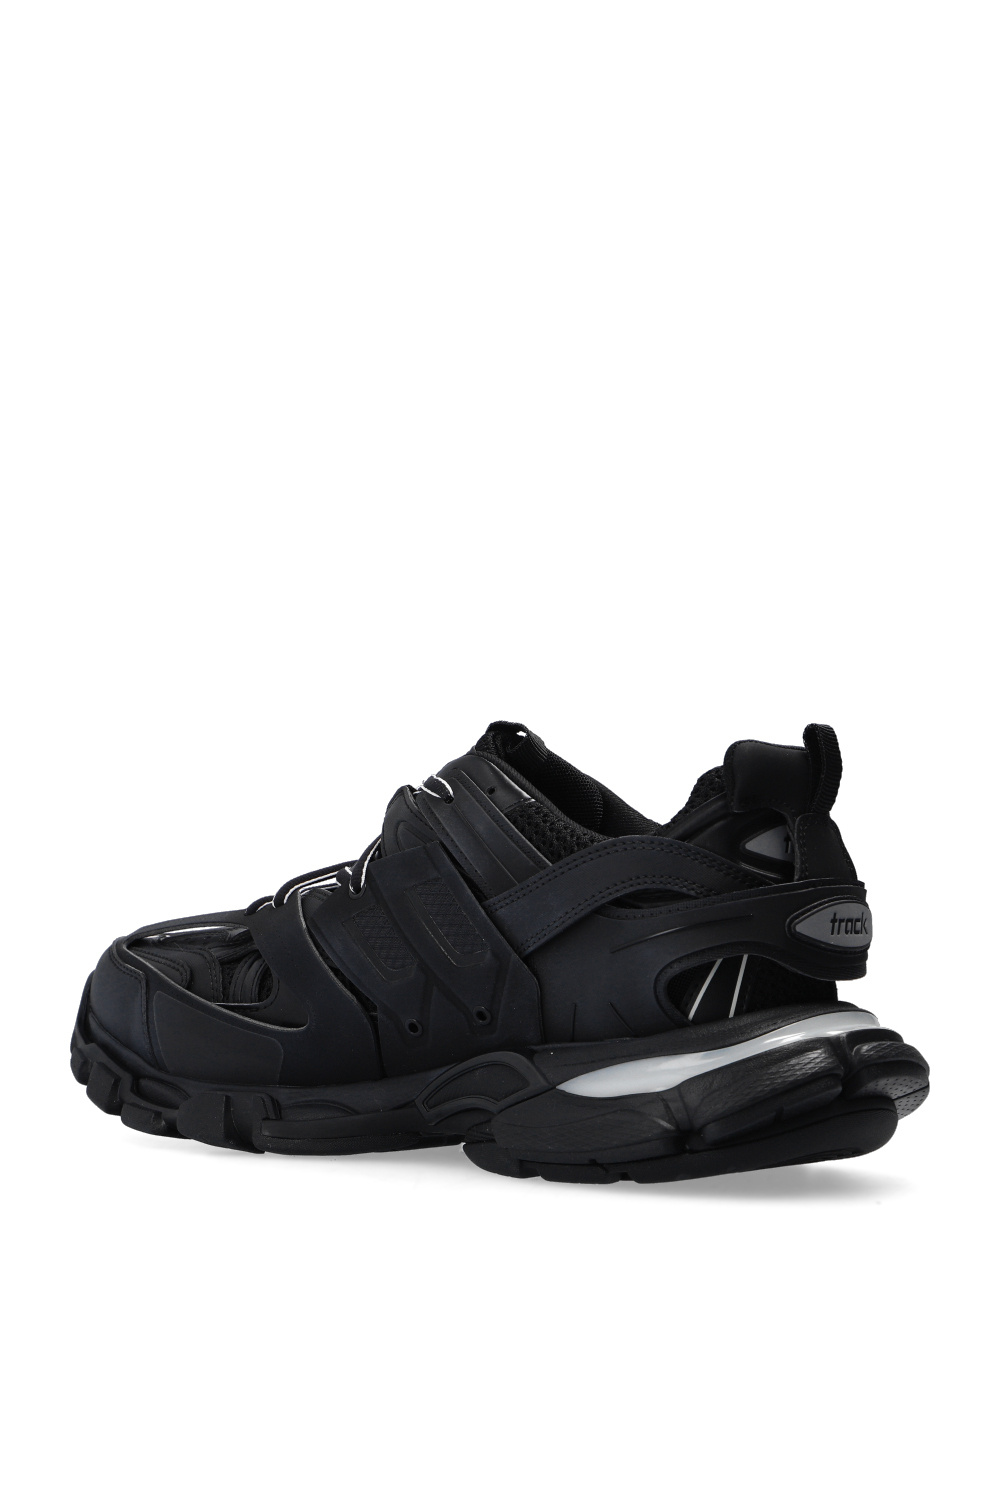 Black ‘Track LED’ sneakers Balenciaga - Vitkac GB